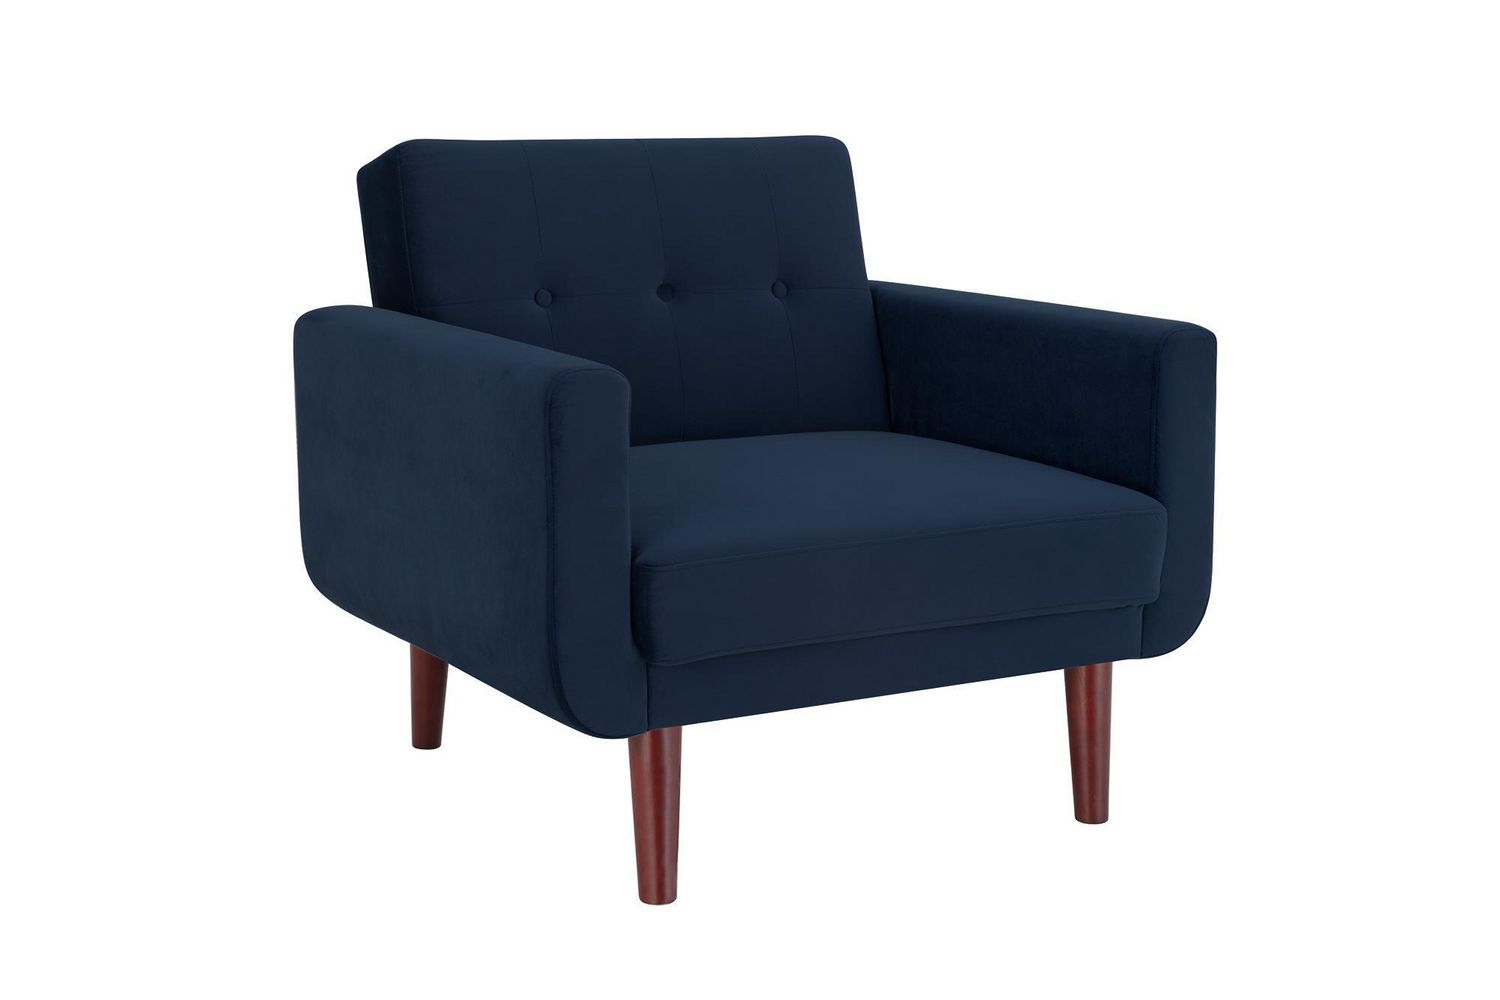 DHP Nola Modern Velvet Chair, Grey | Walmart Canada